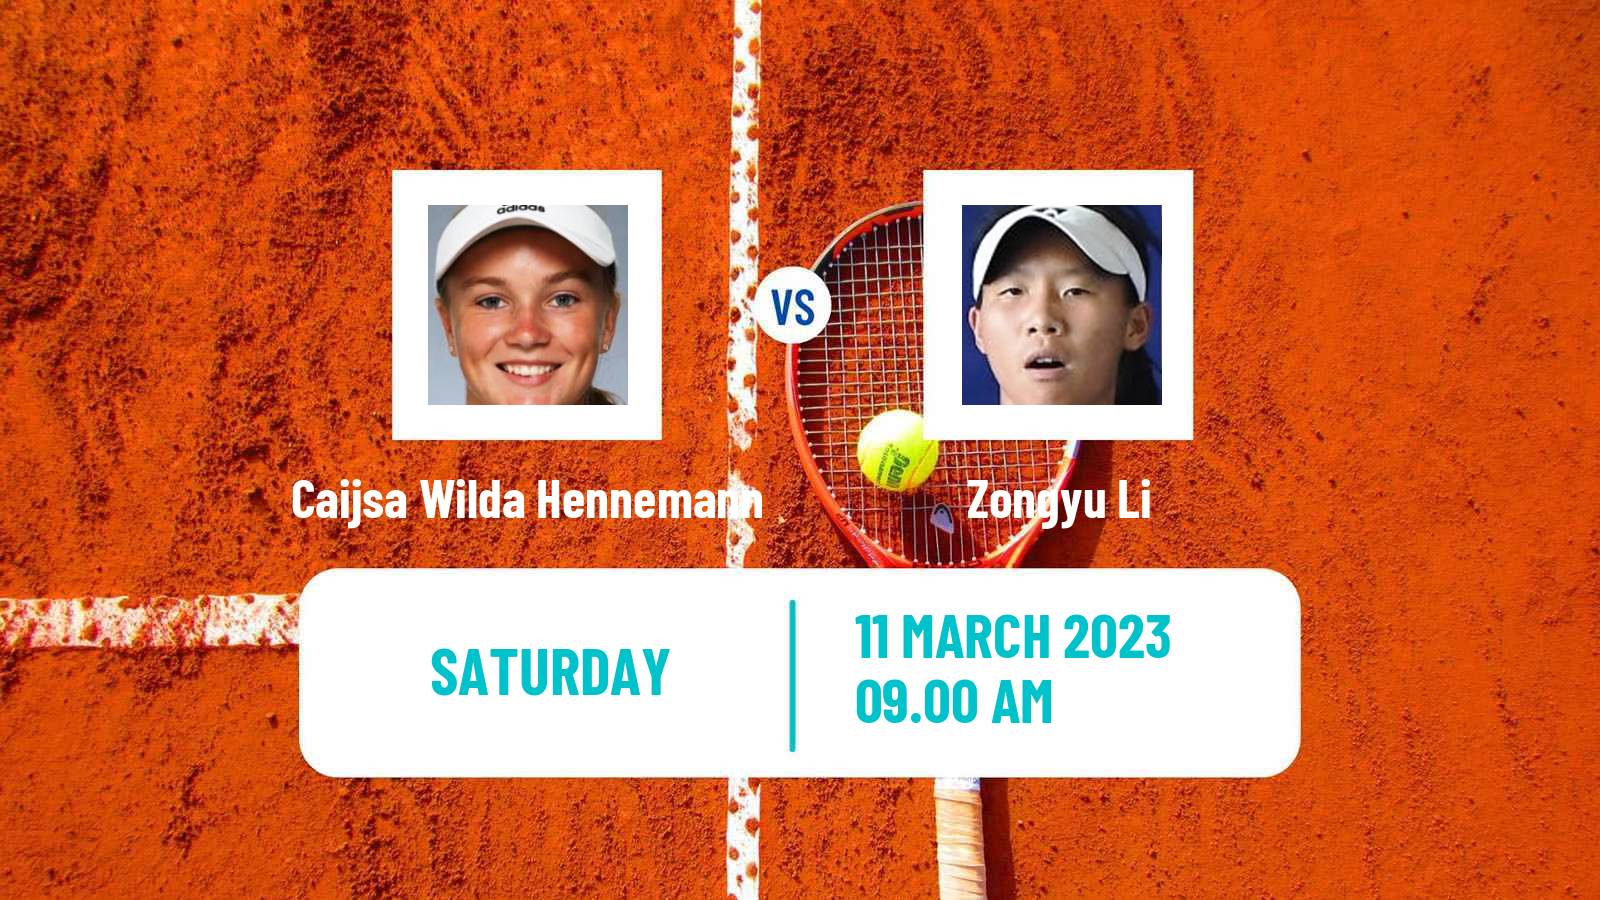 Tennis ITF Tournaments Caijsa Wilda Hennemann - Zongyu Li